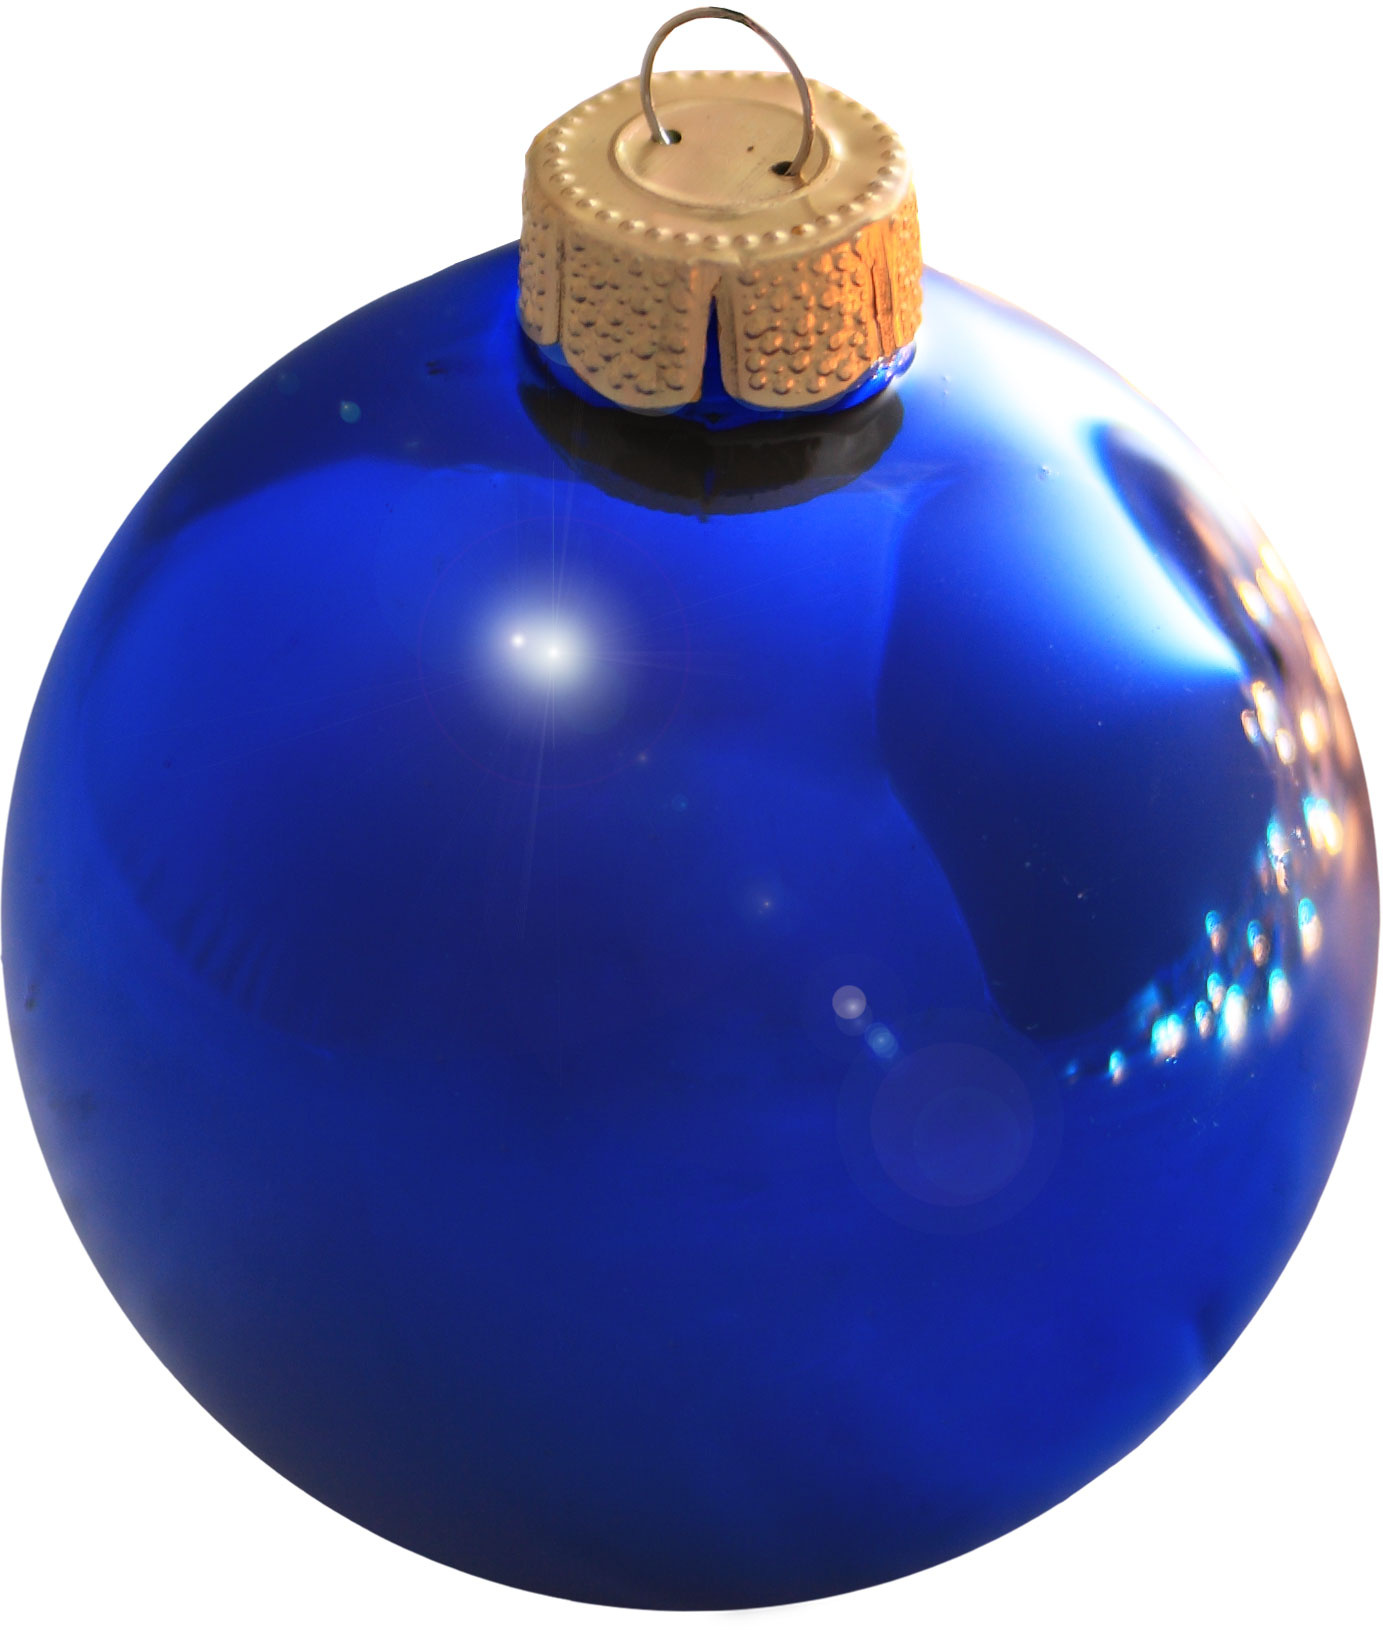 Wedgewood Blue Glass Ball Christmas Ornament